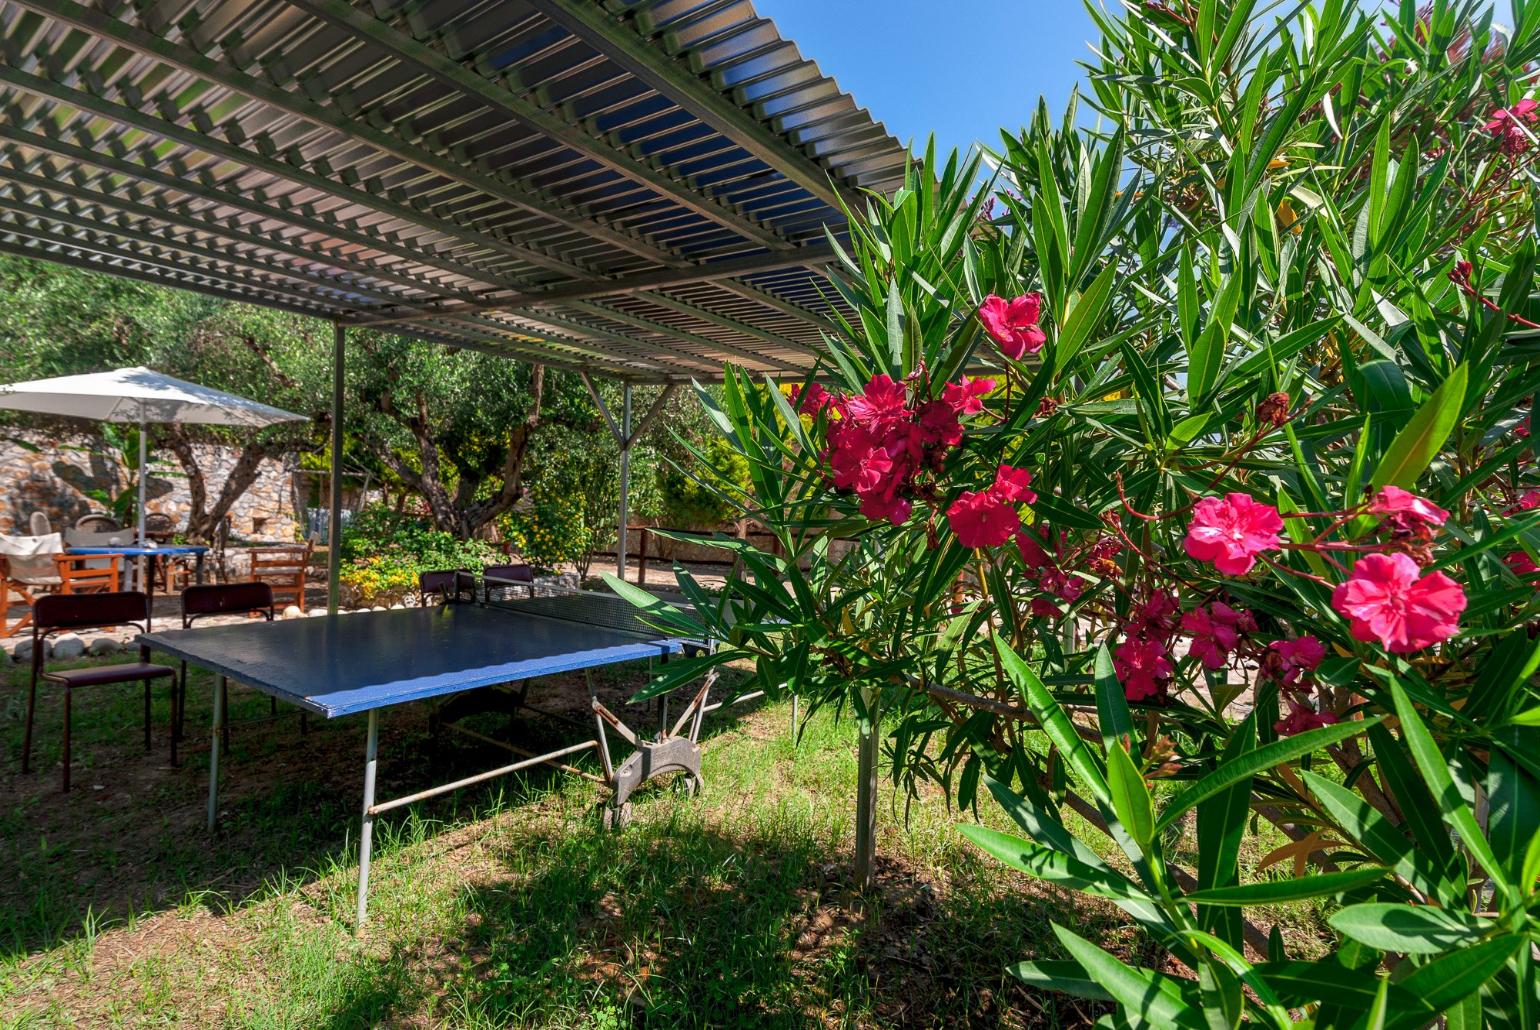 Table tennis in shared garden area of Eleon Villas